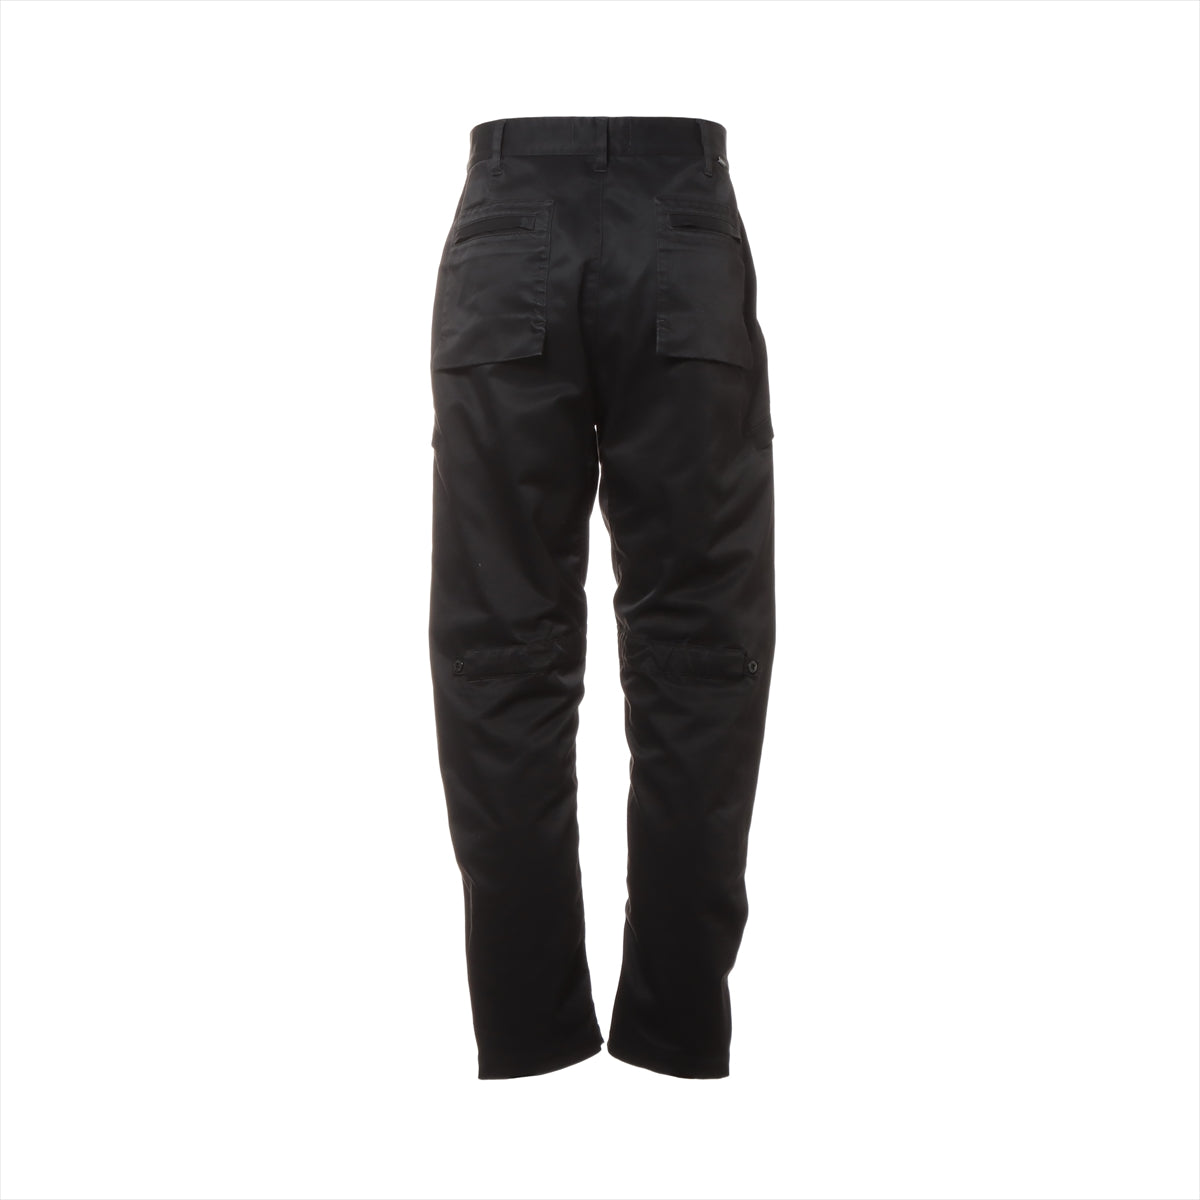 Stone Island Polyester Cargo pants 46 Men's Black